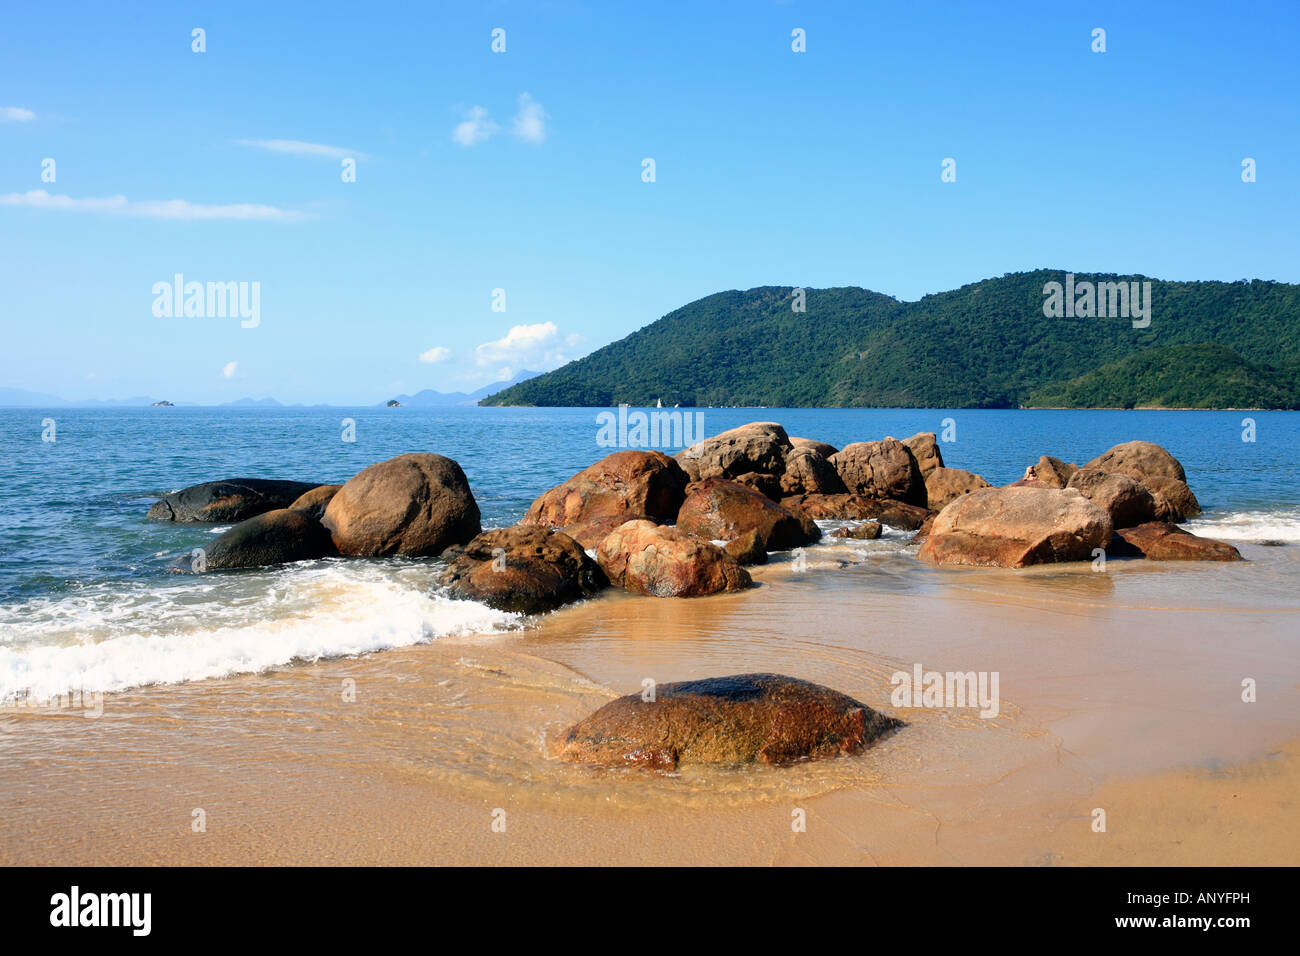 beach in the beautiful island of ilha grande near rio de janeiro in brazil Stock Photo